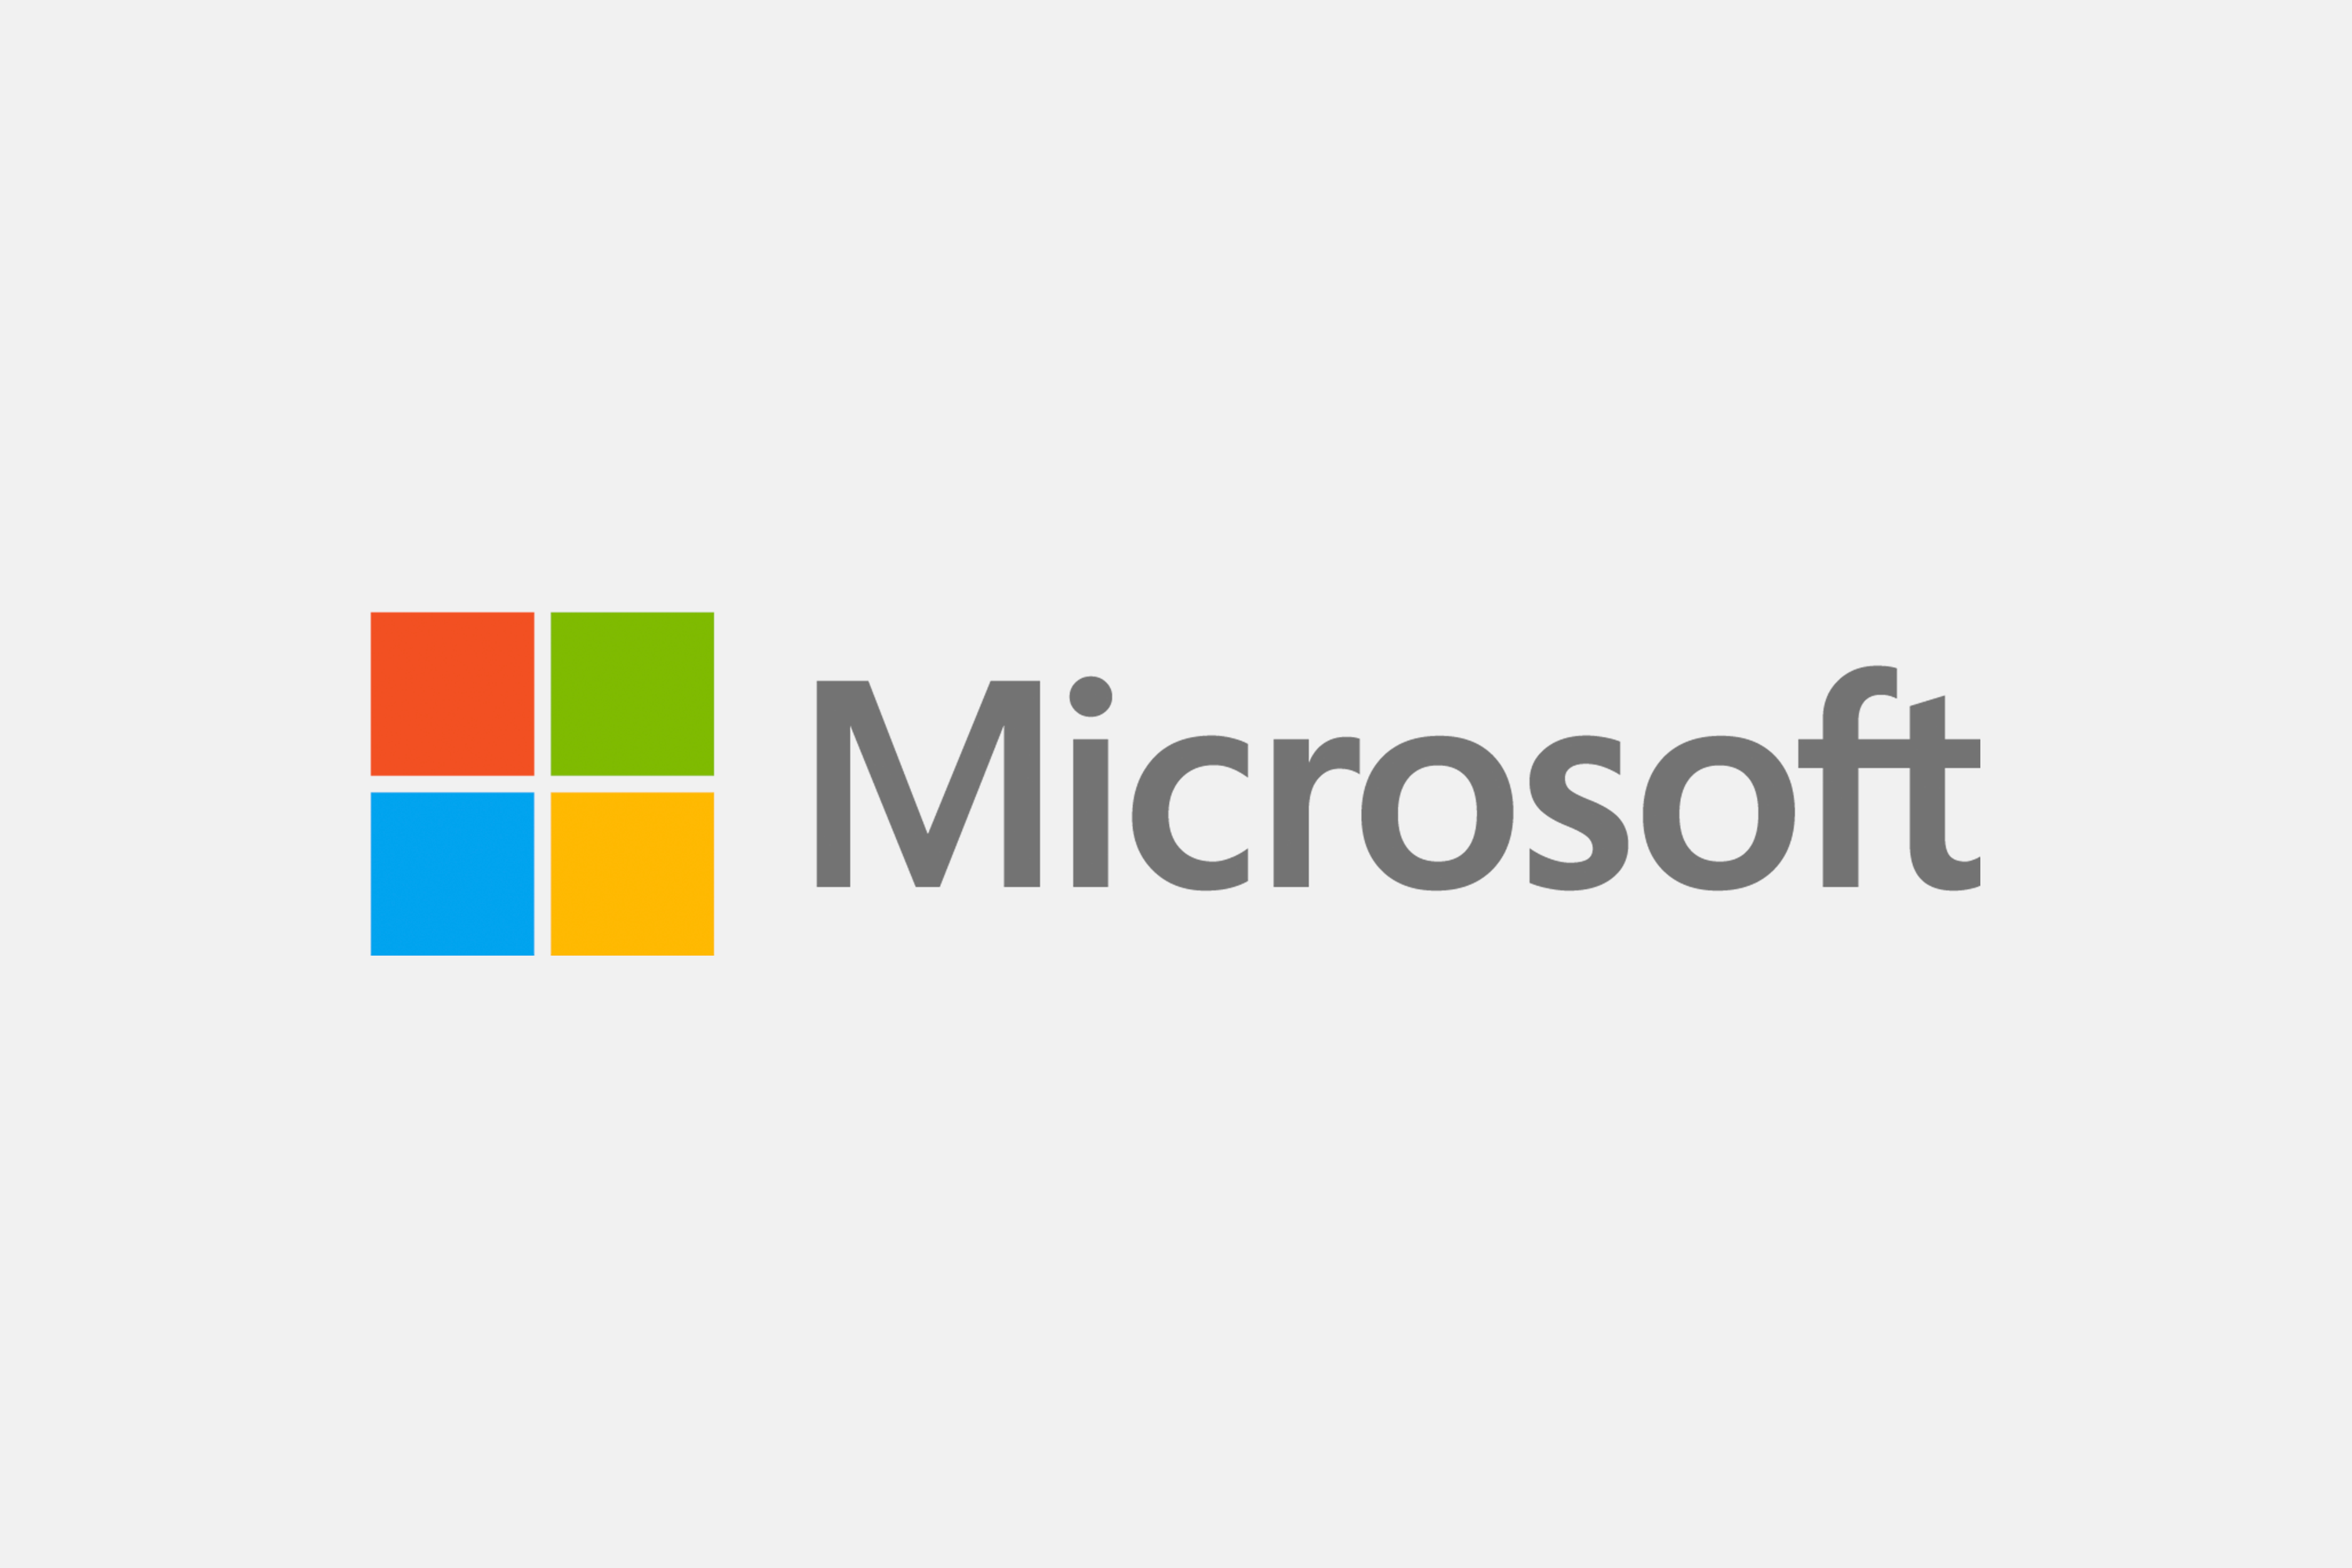 Microsoft logo on a grey background